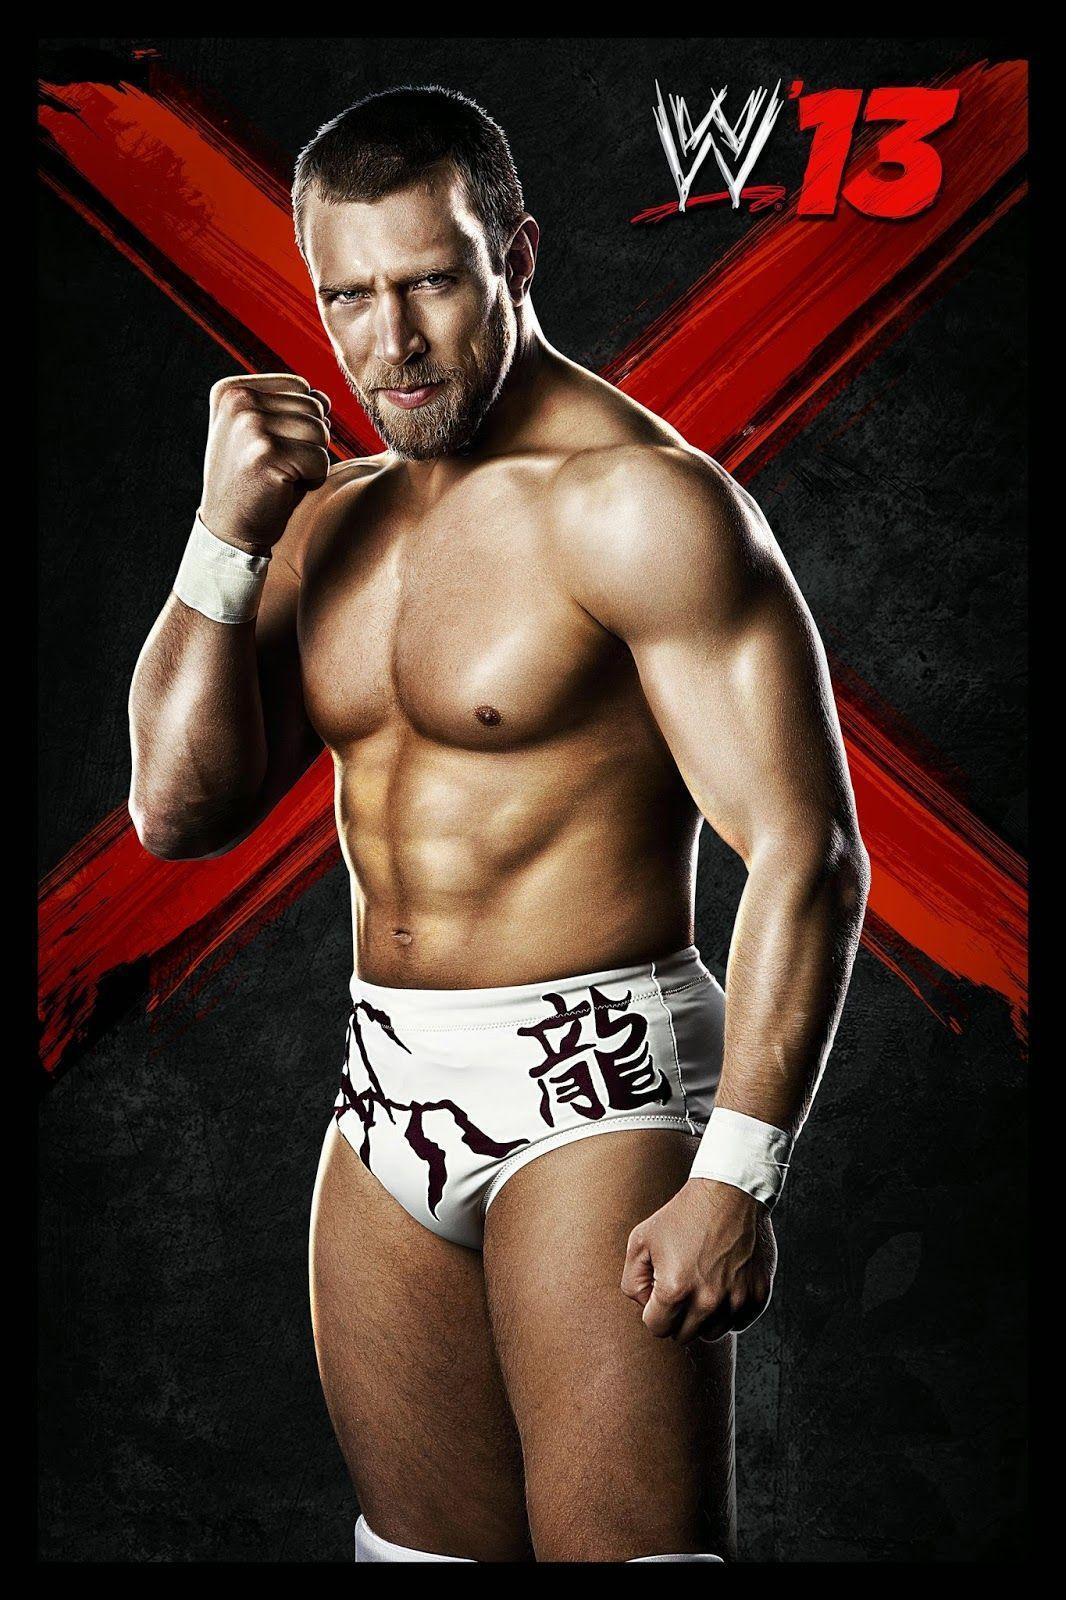 Daniel Bryan HD Wallpaper Free Download. WWE HD WALLPAPER FREE